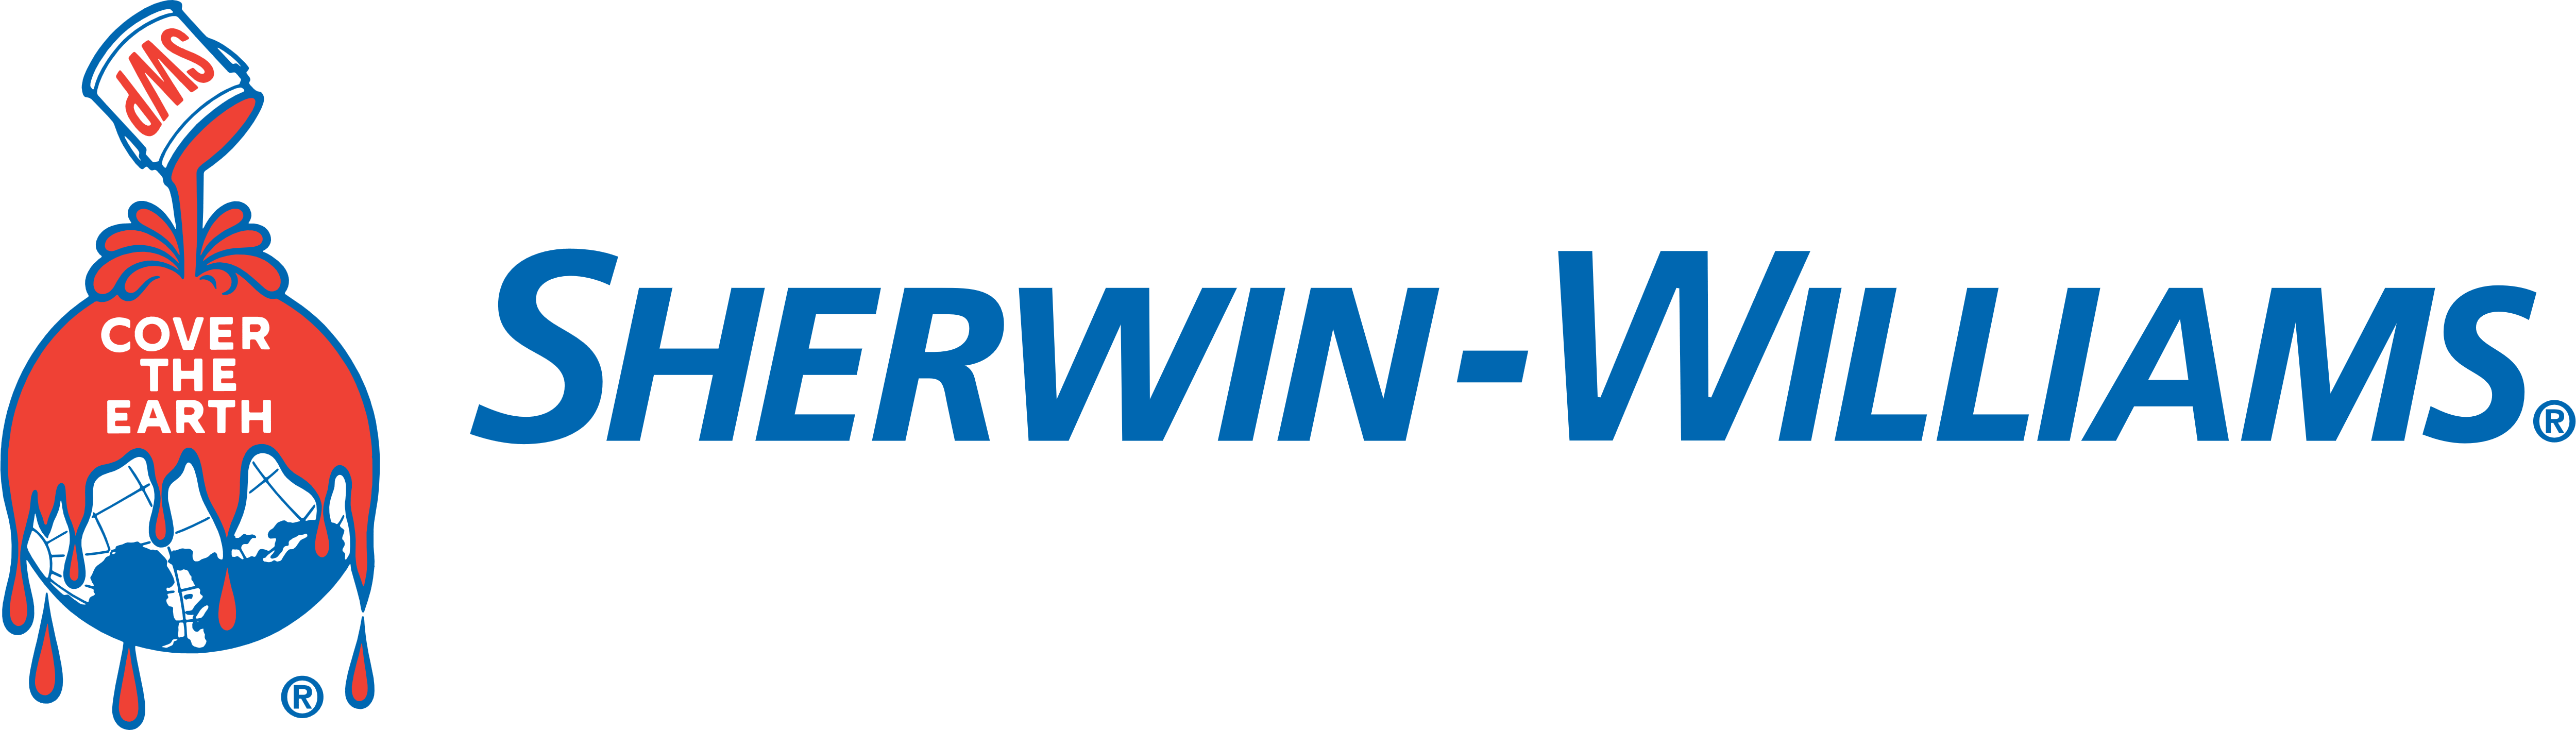 Sherwin-Williams_logo_wordmark-267838526